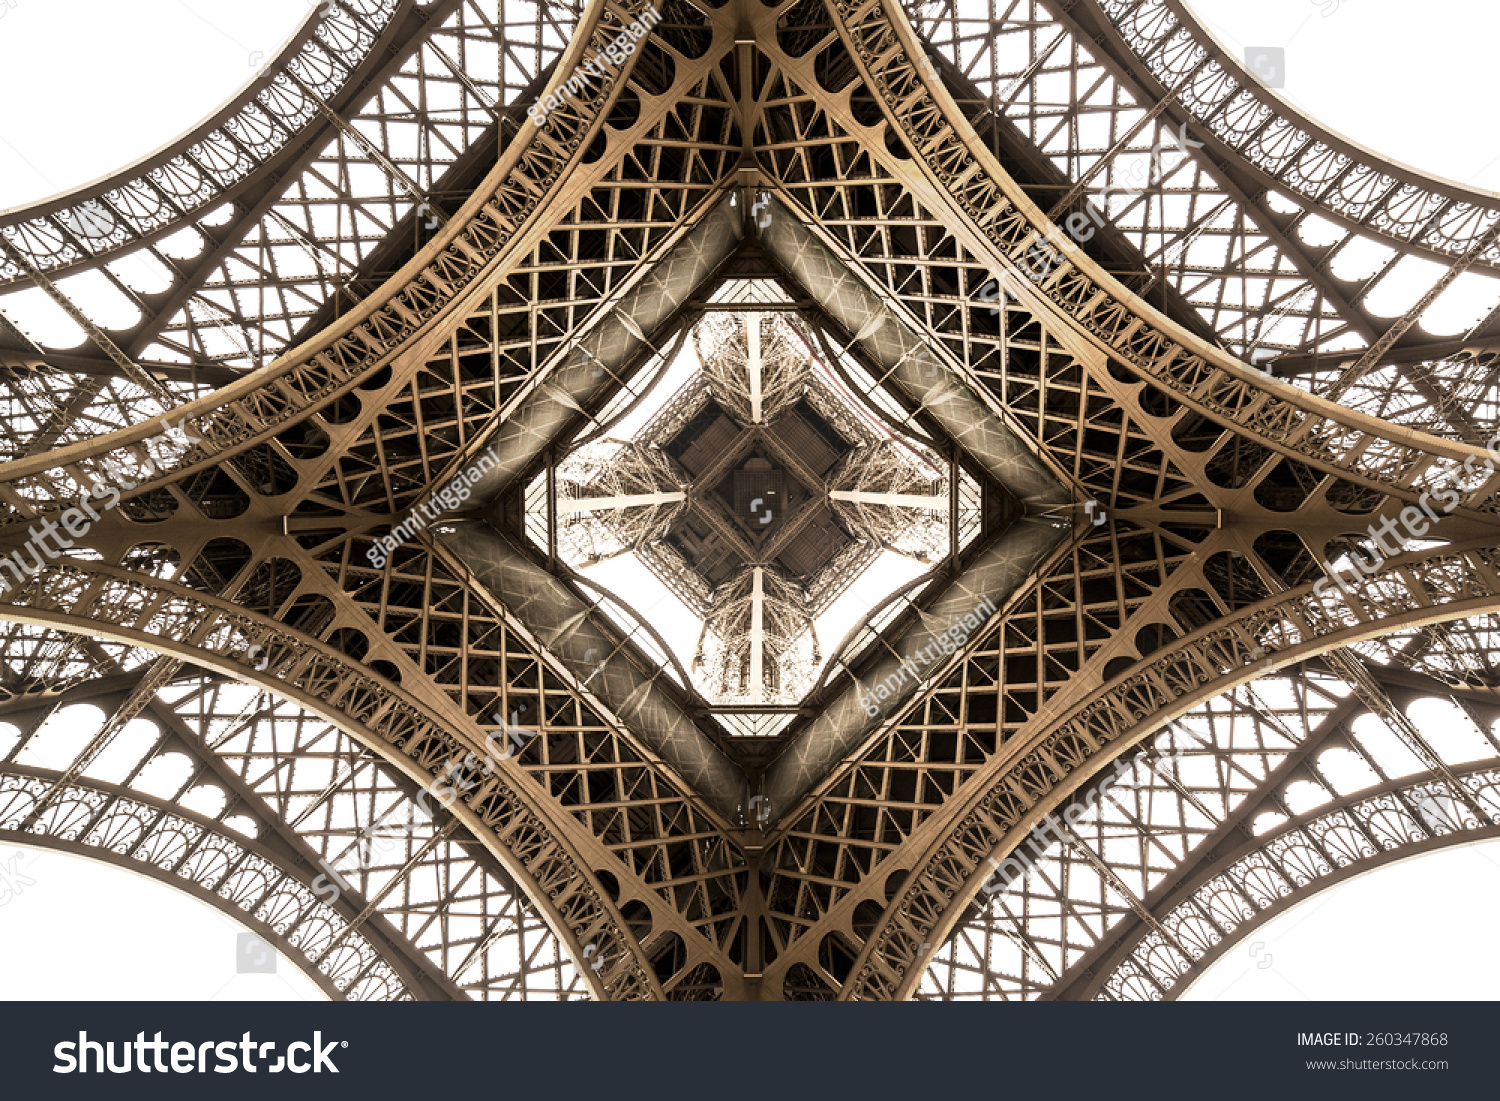 Eiffel Tower architecture detail, bottom view. unique angle #260347868